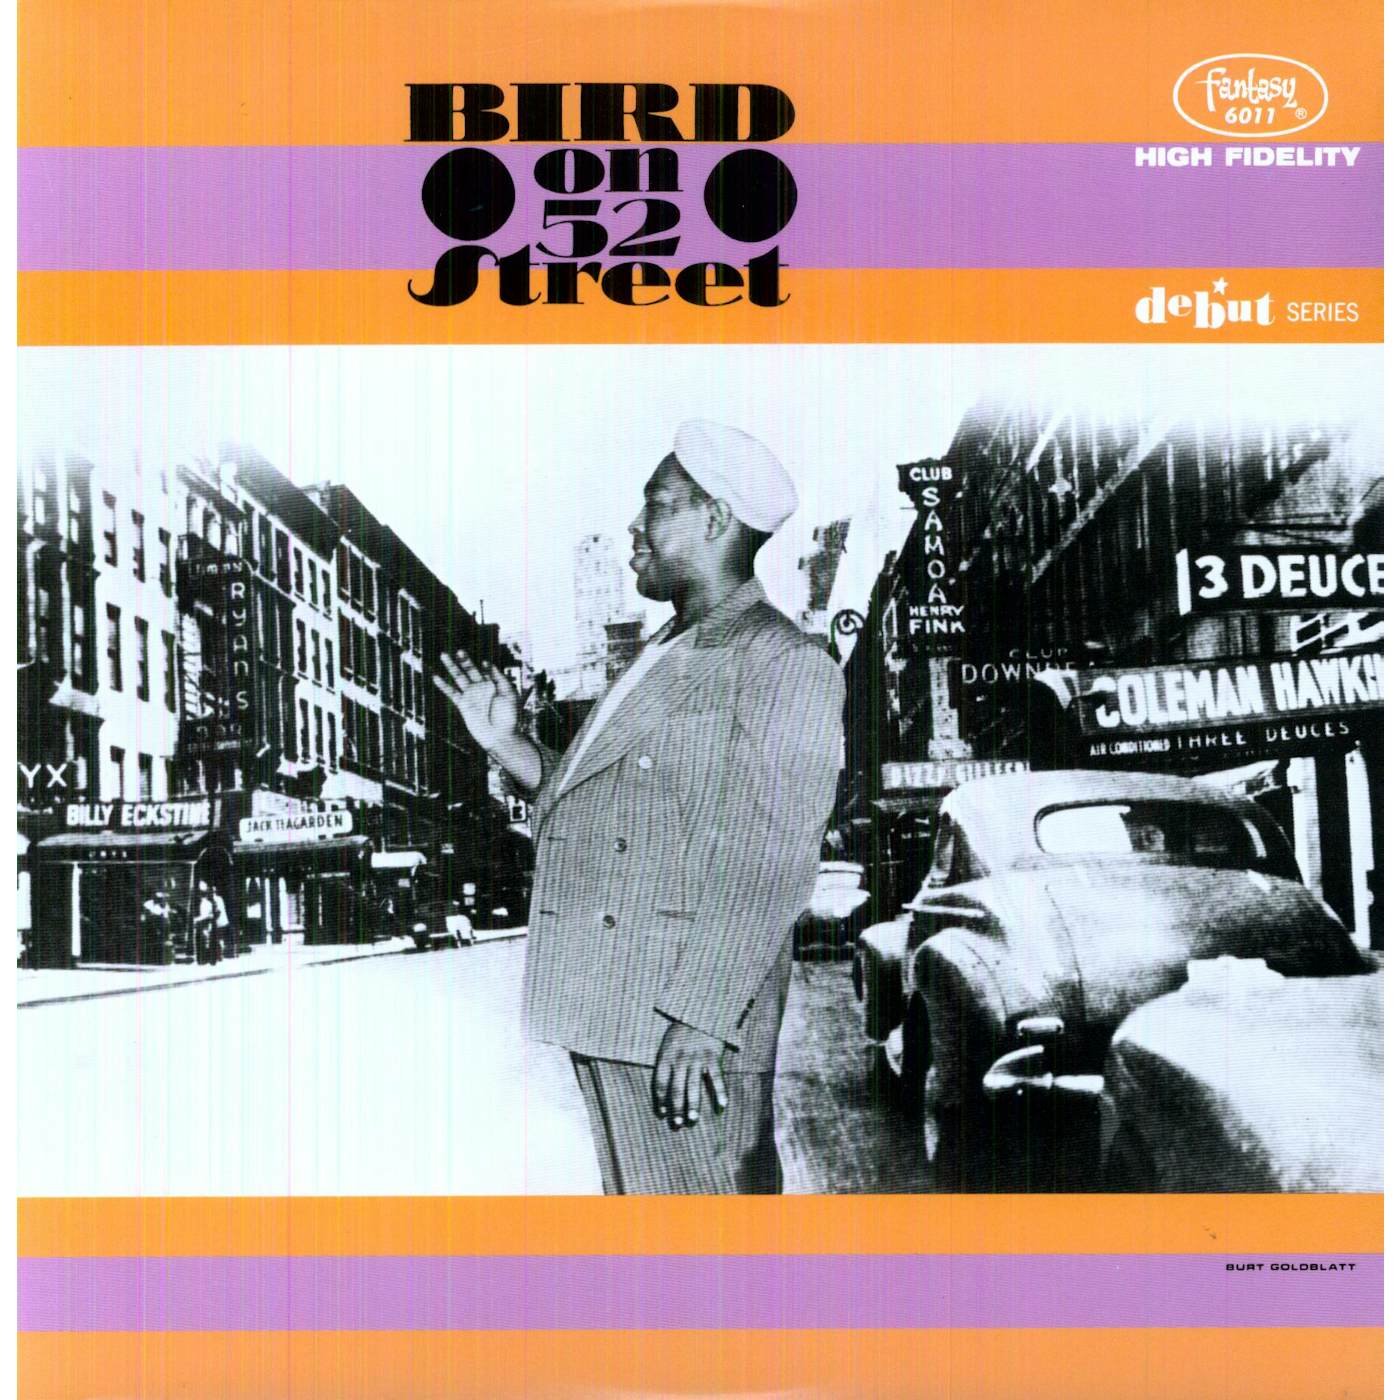 Charlie Parker Bird On 52nd Street Vinyl Record